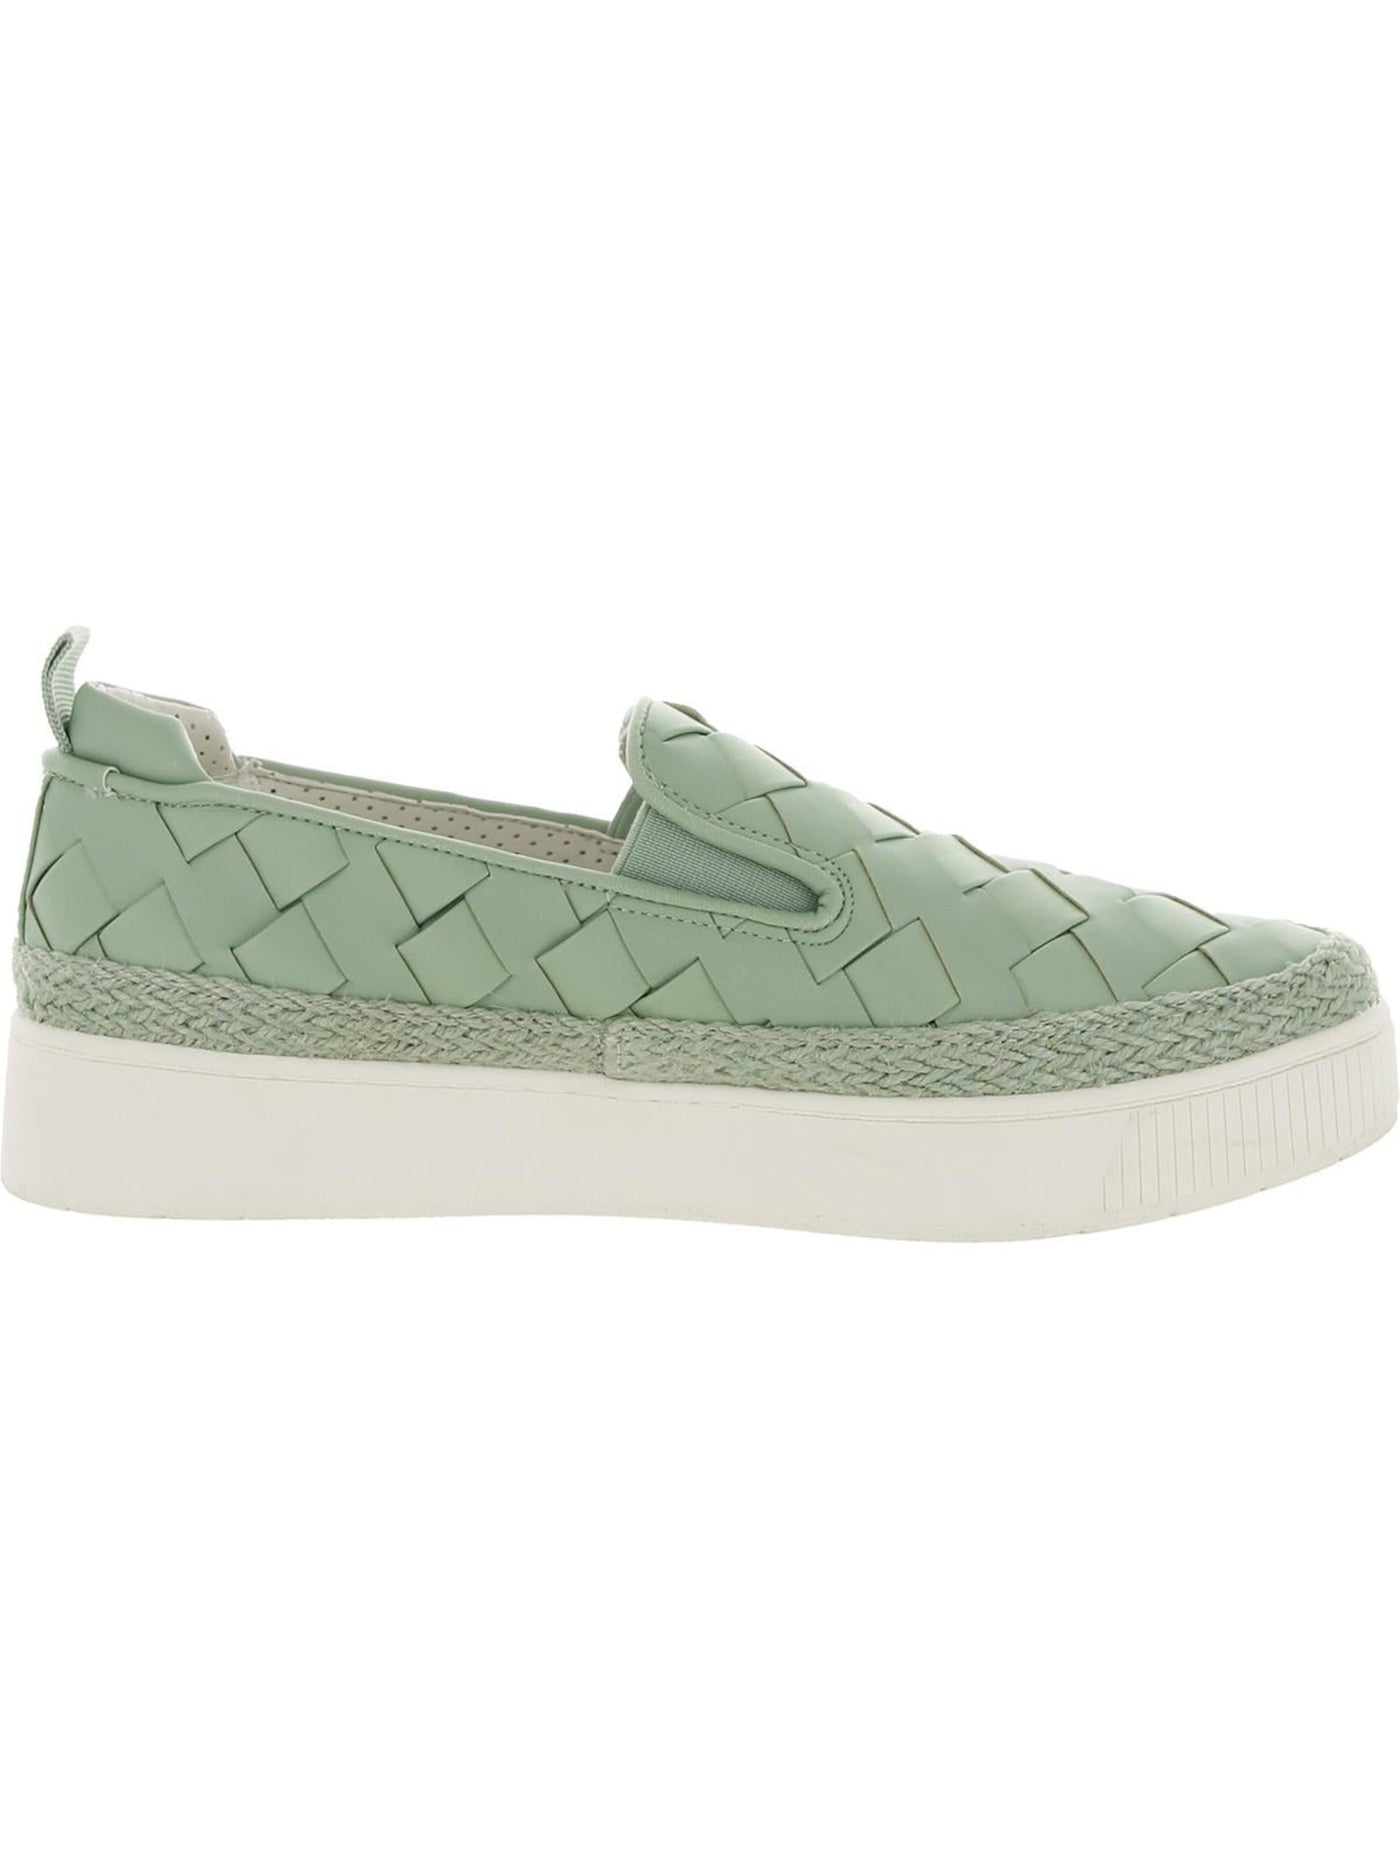 FRANCO SARTO Womens Green Padded Back Pull-Tab Woven Goring Homer 3 Almond Toe Platform Slip On Sneakers Shoes 6.5 M